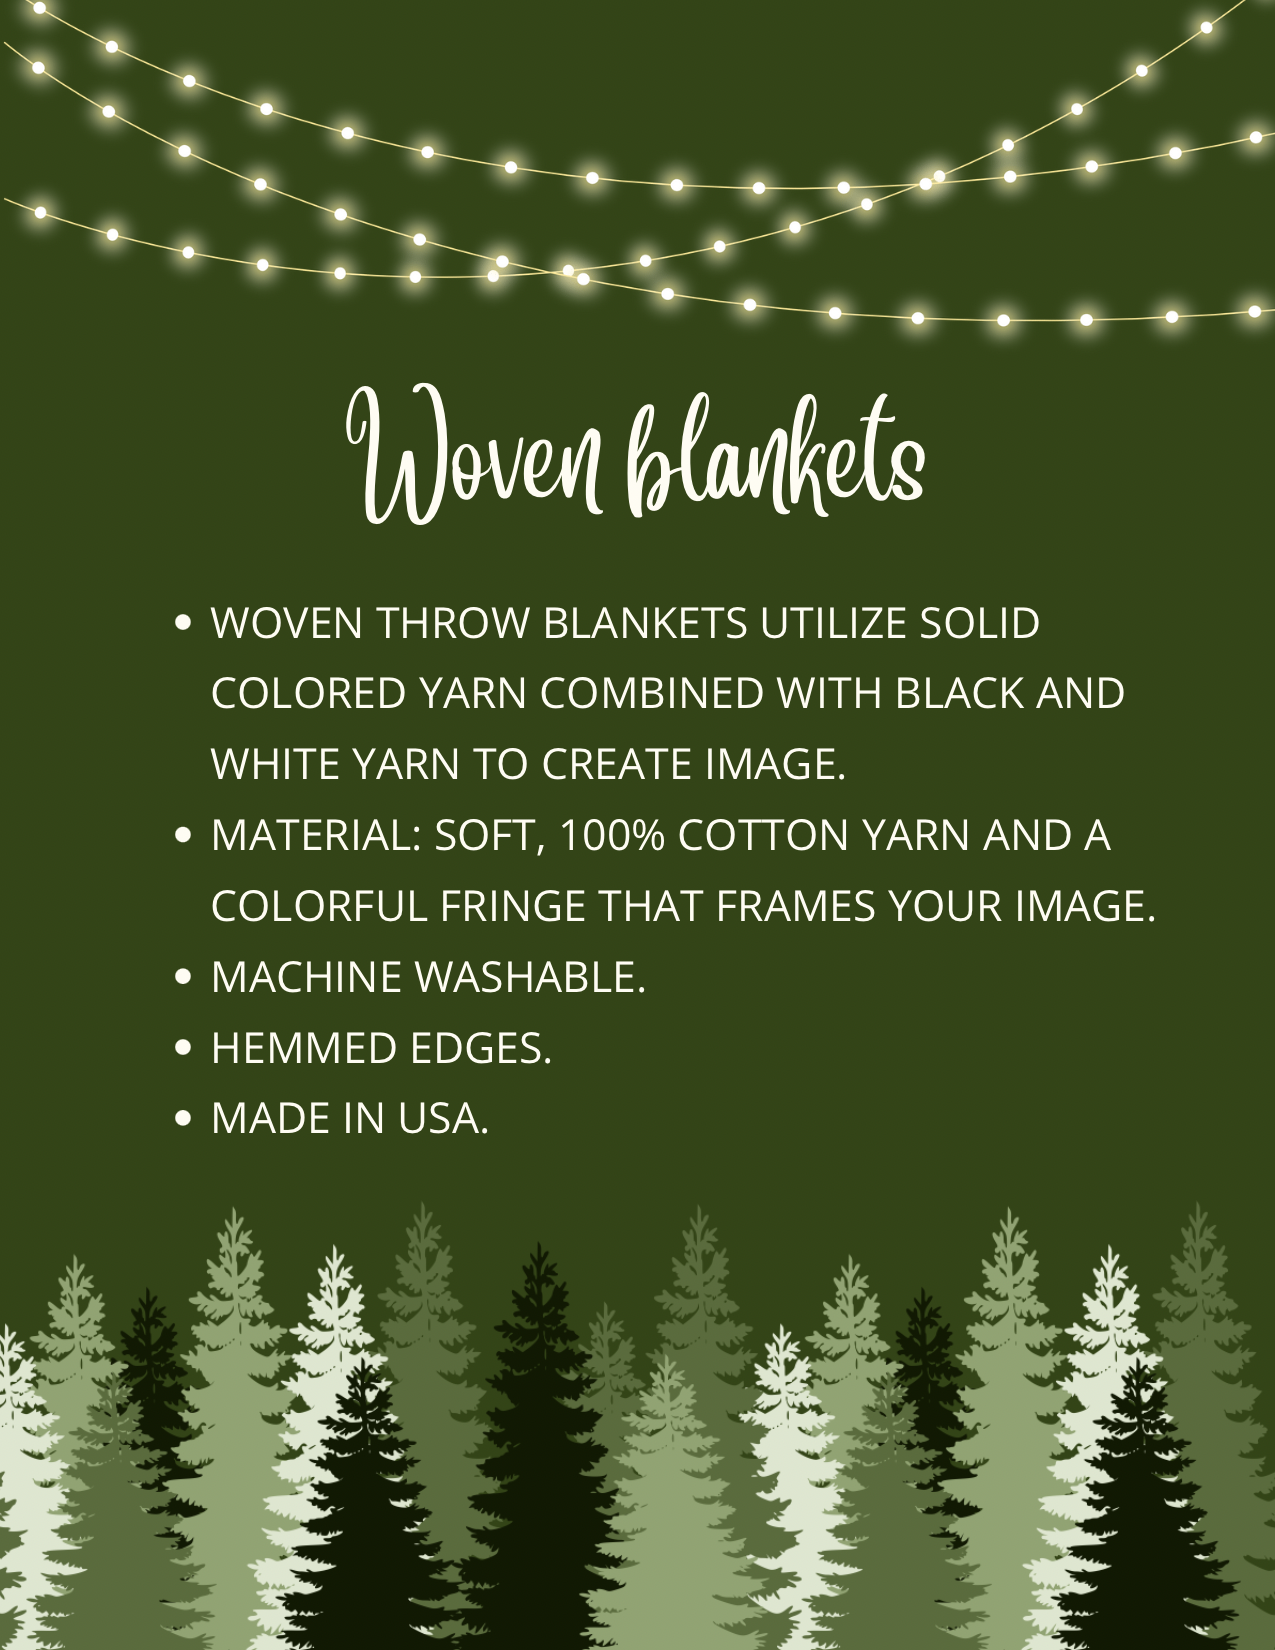 Halloween weed woven blanket 50x60” clearance